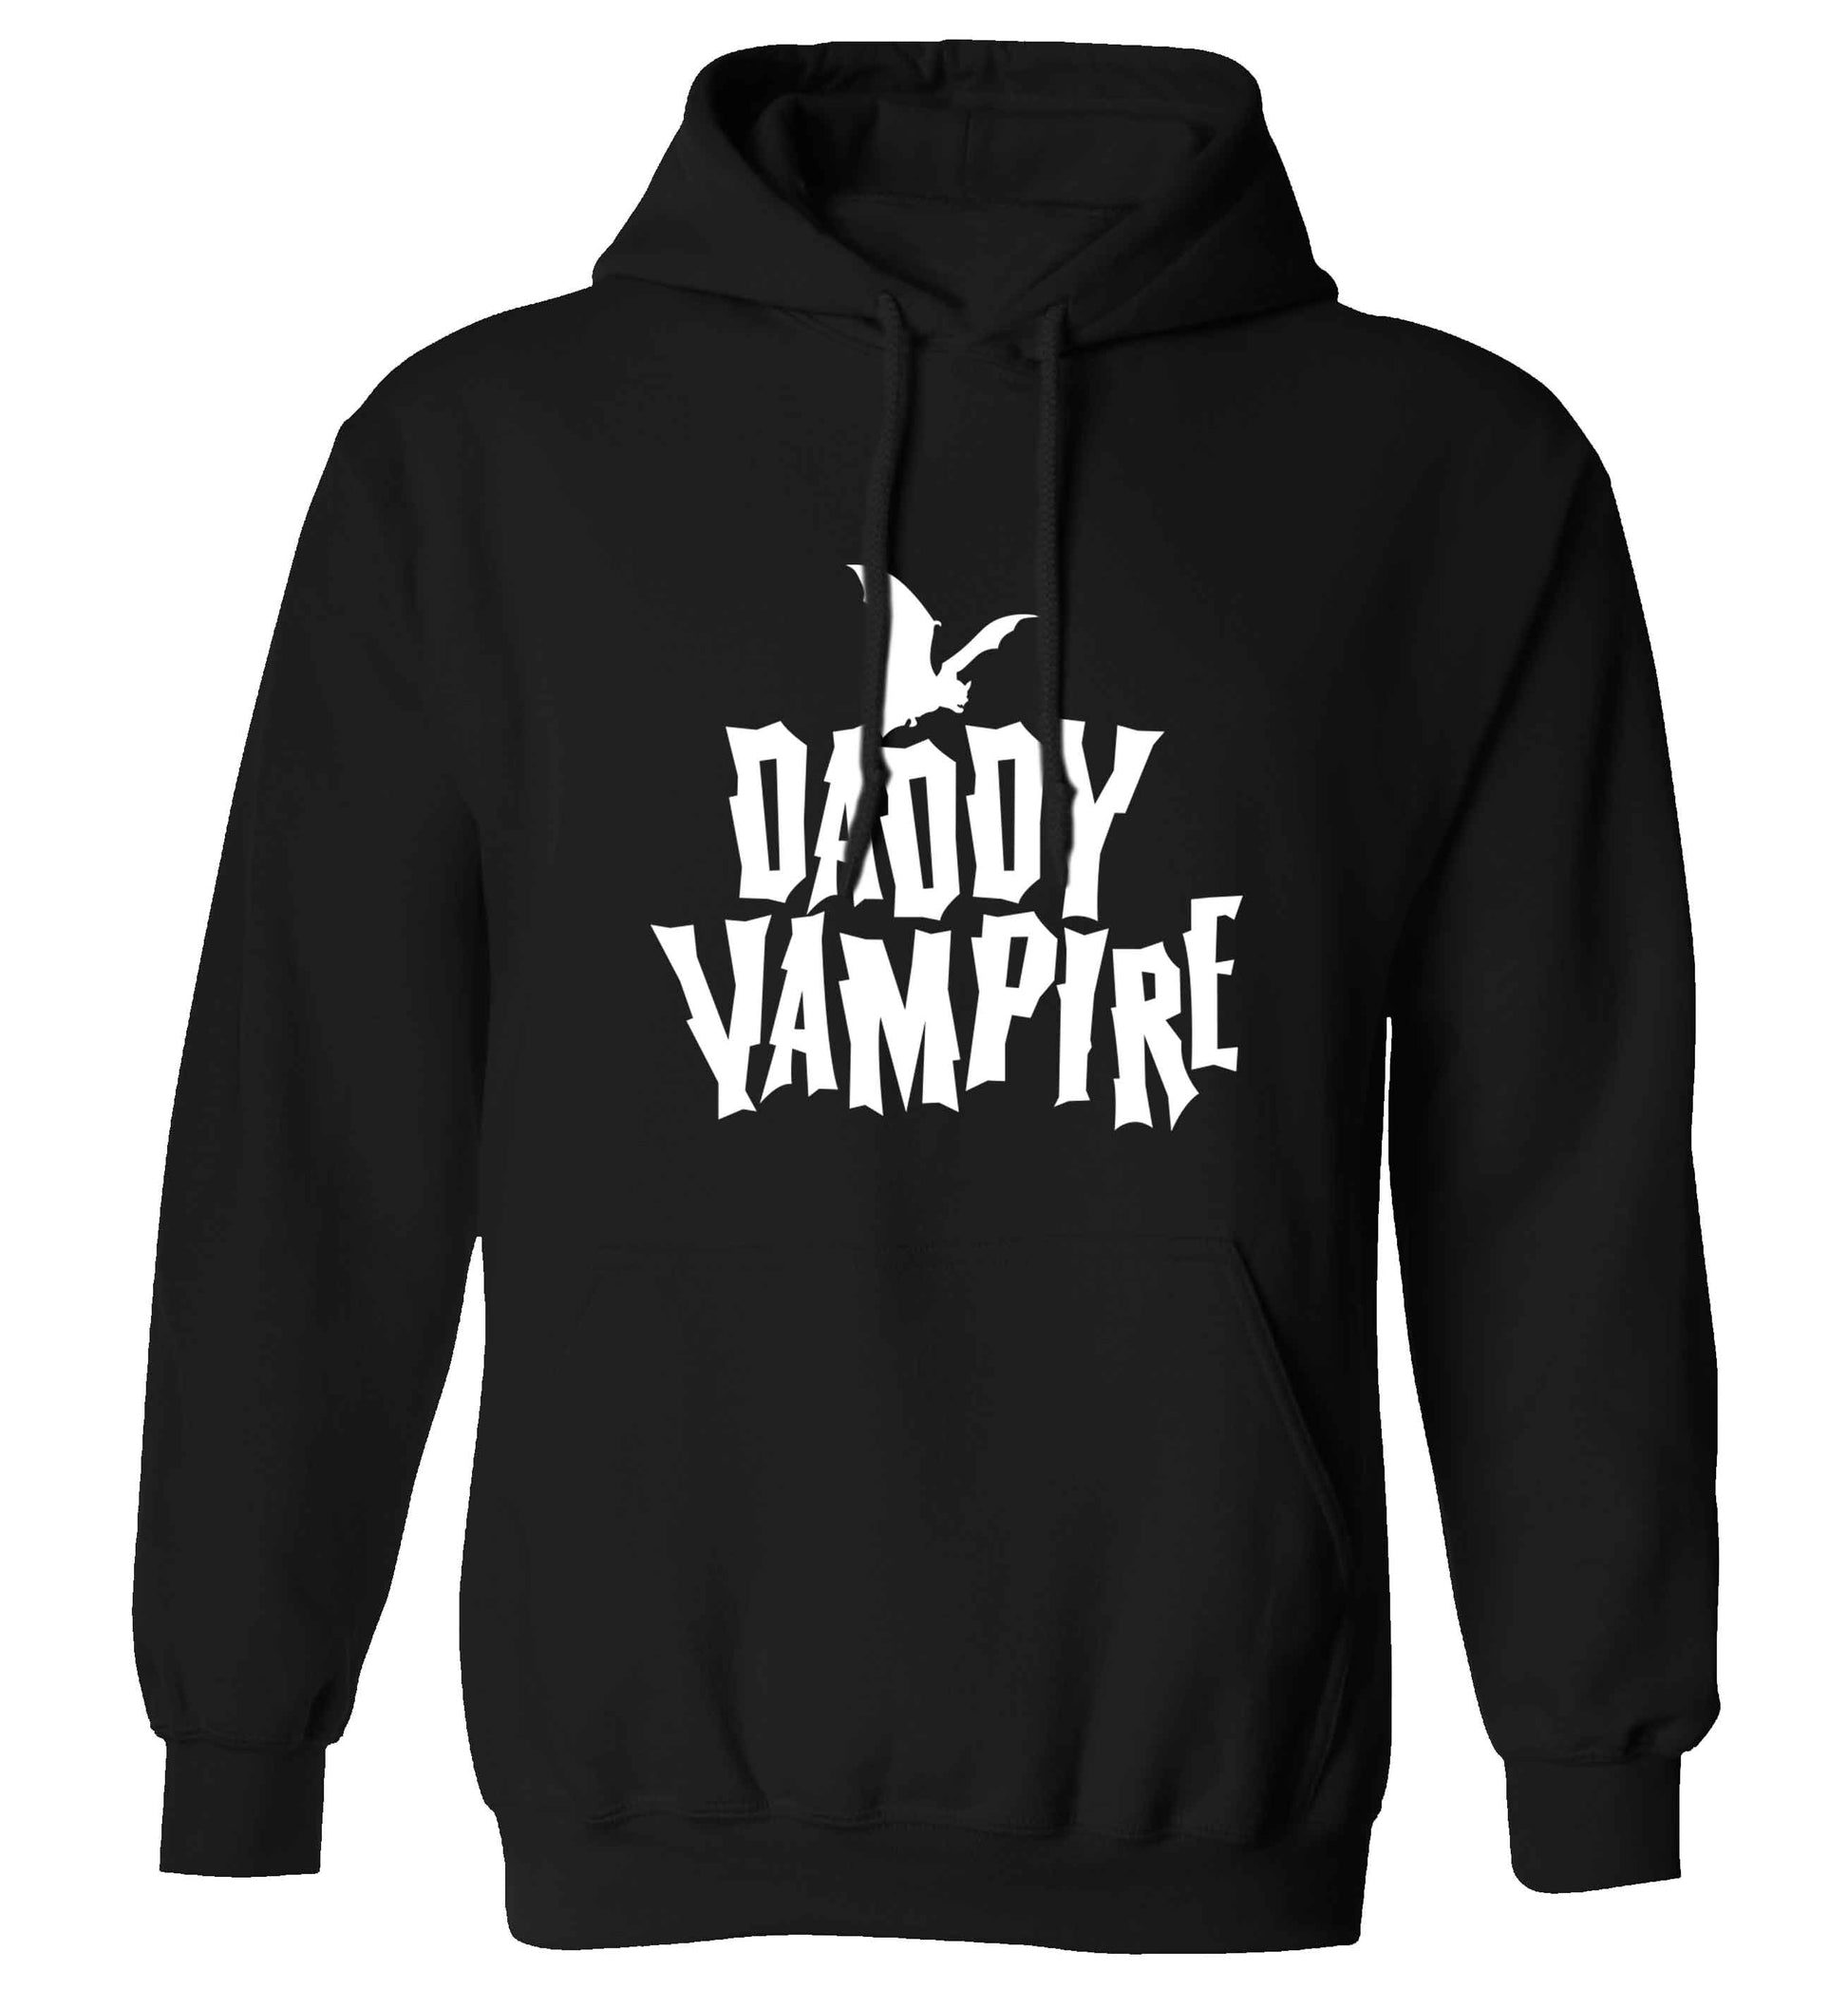 Daddy vampire adults unisex black hoodie 2XL